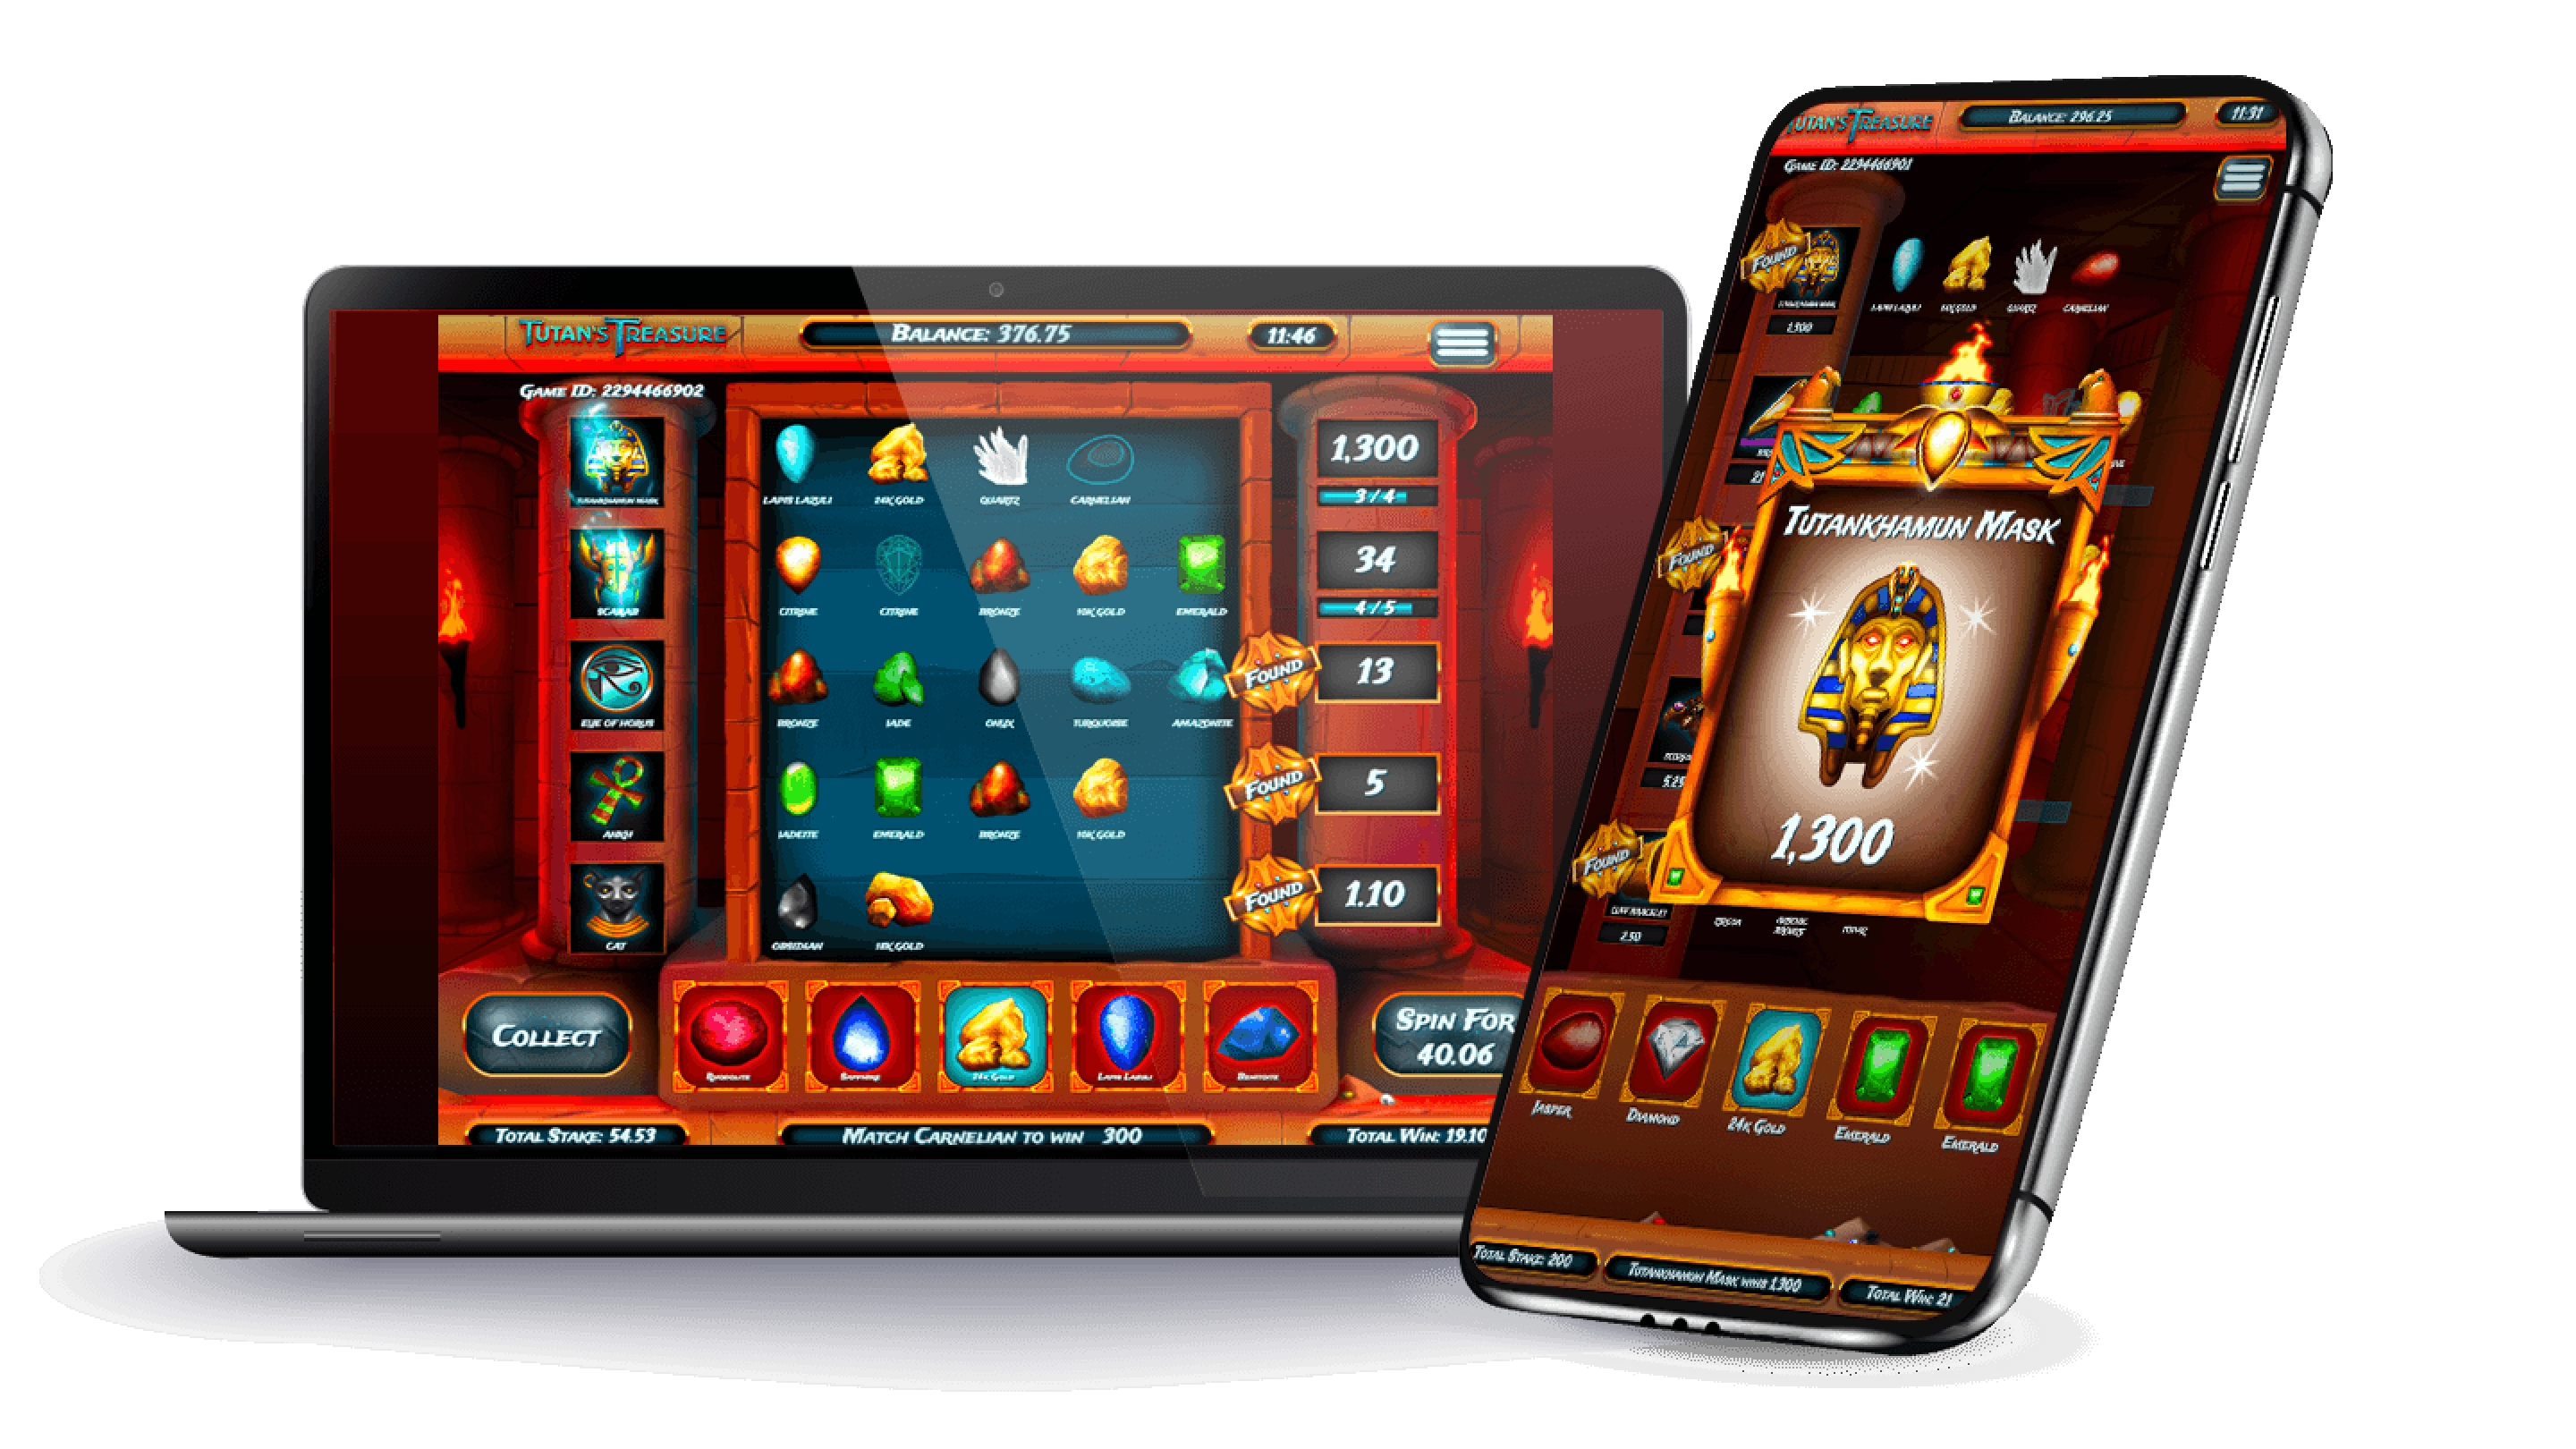 The Tutan's Treasure Online Slot Demo Game by Slingo